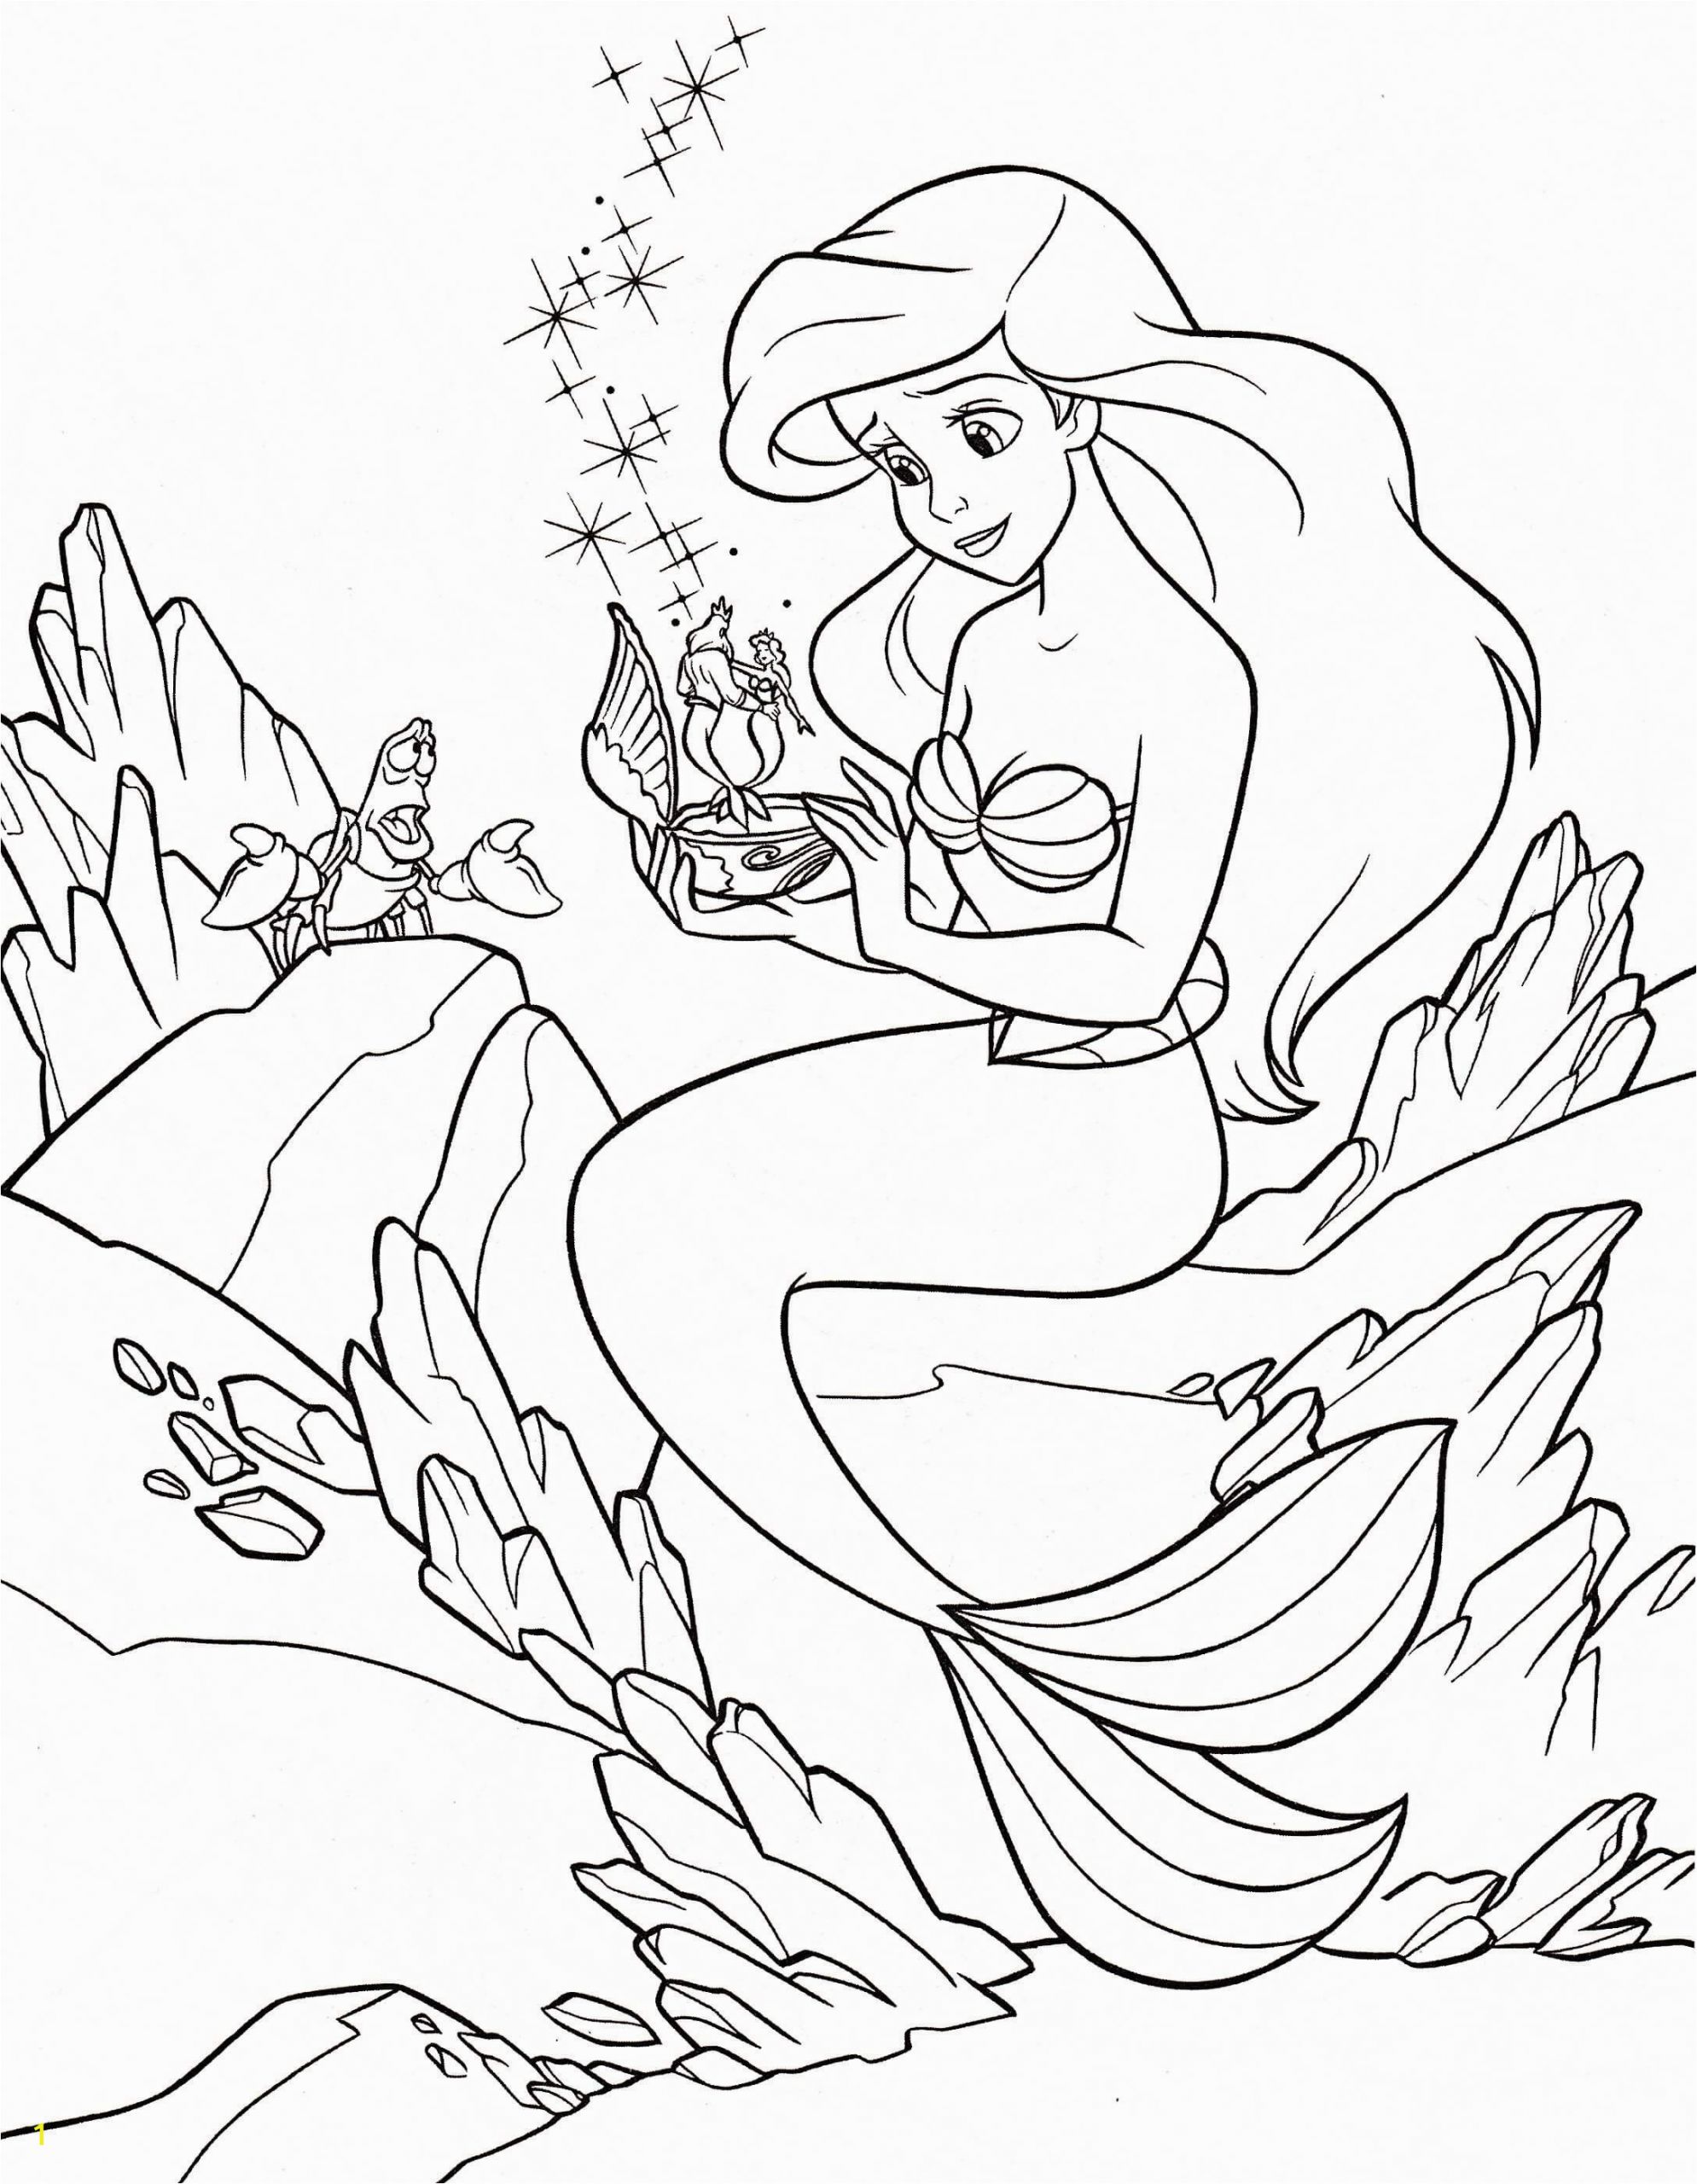 Disney Coloring Pages for Adults Pdf Princess Ariel Coloring Page Pdf